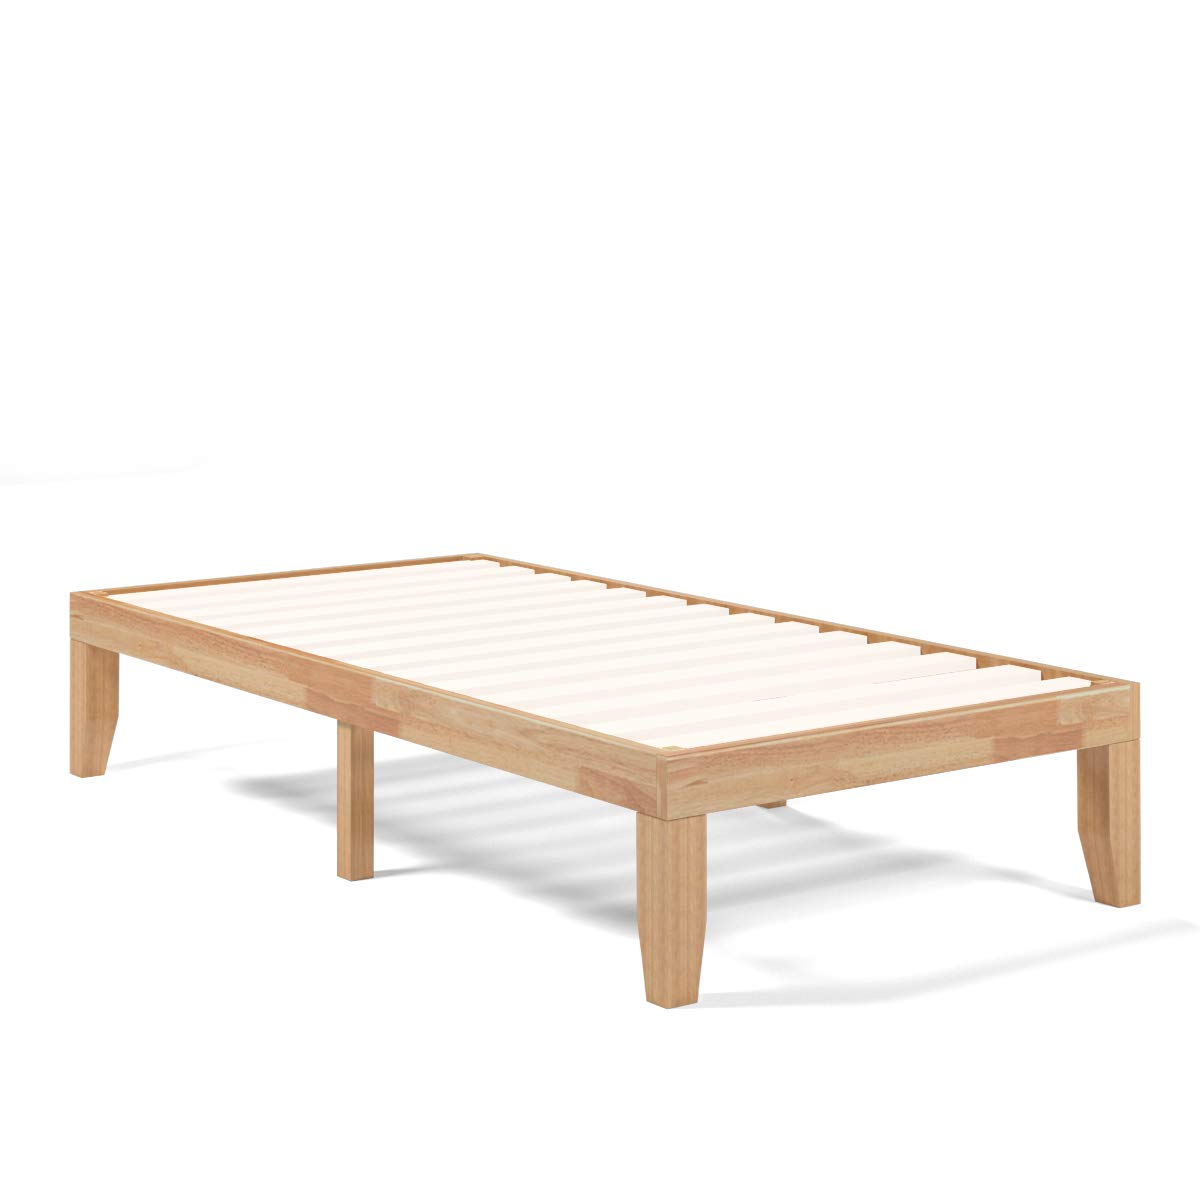 No Box Spring Needed 14 Inch Solid Wood Platform Bed Frame